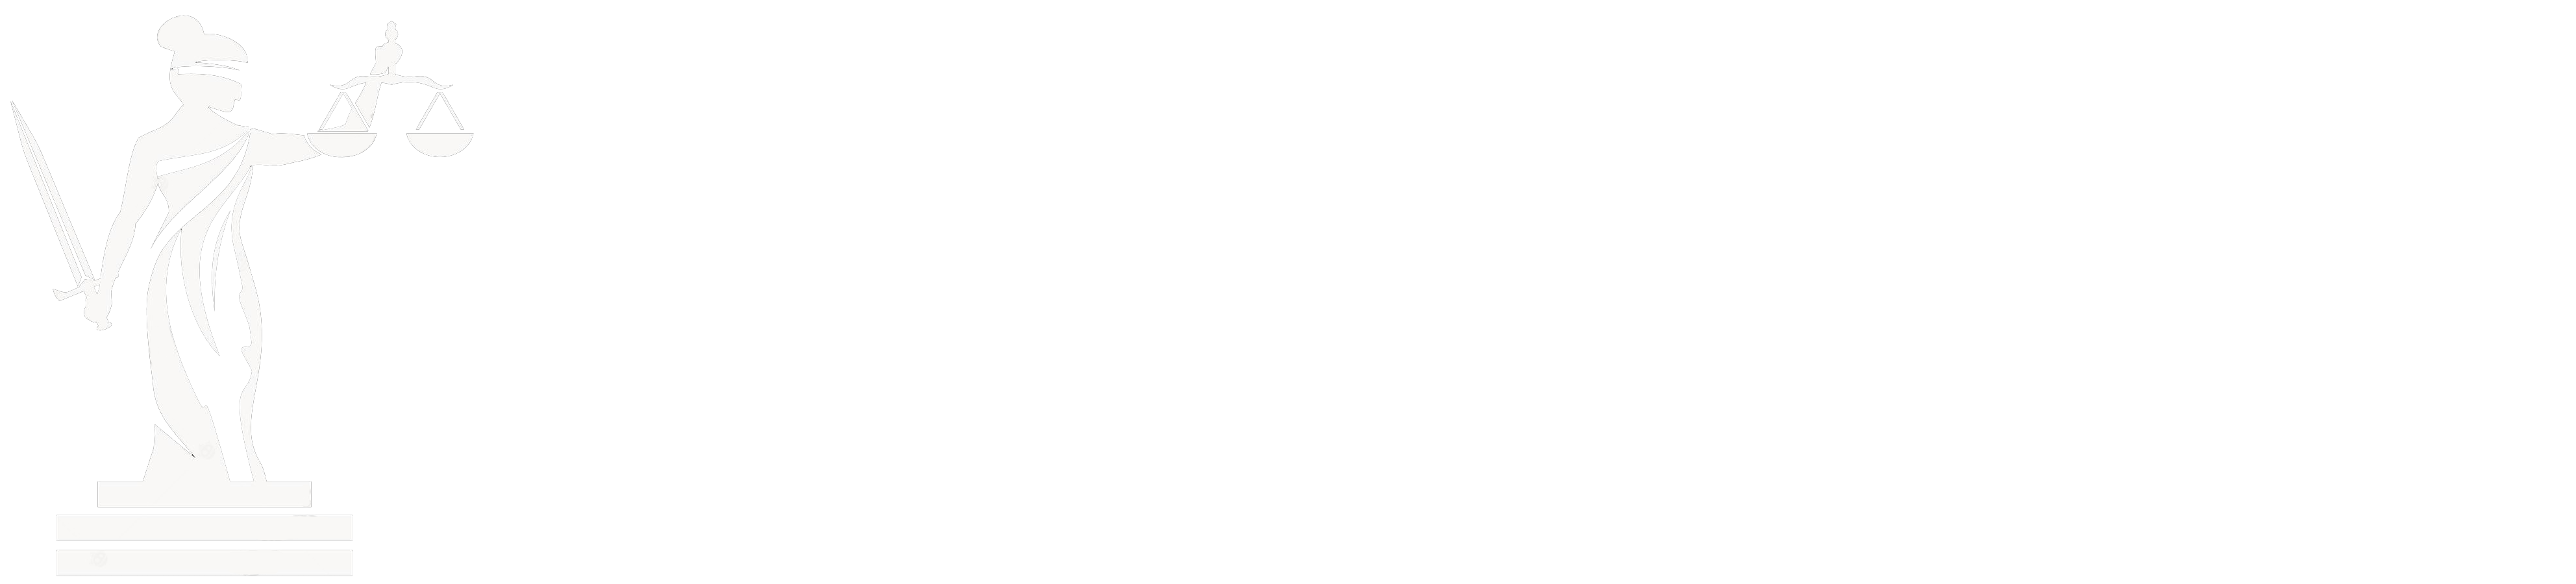 Car Collision Legal Help Mississauga